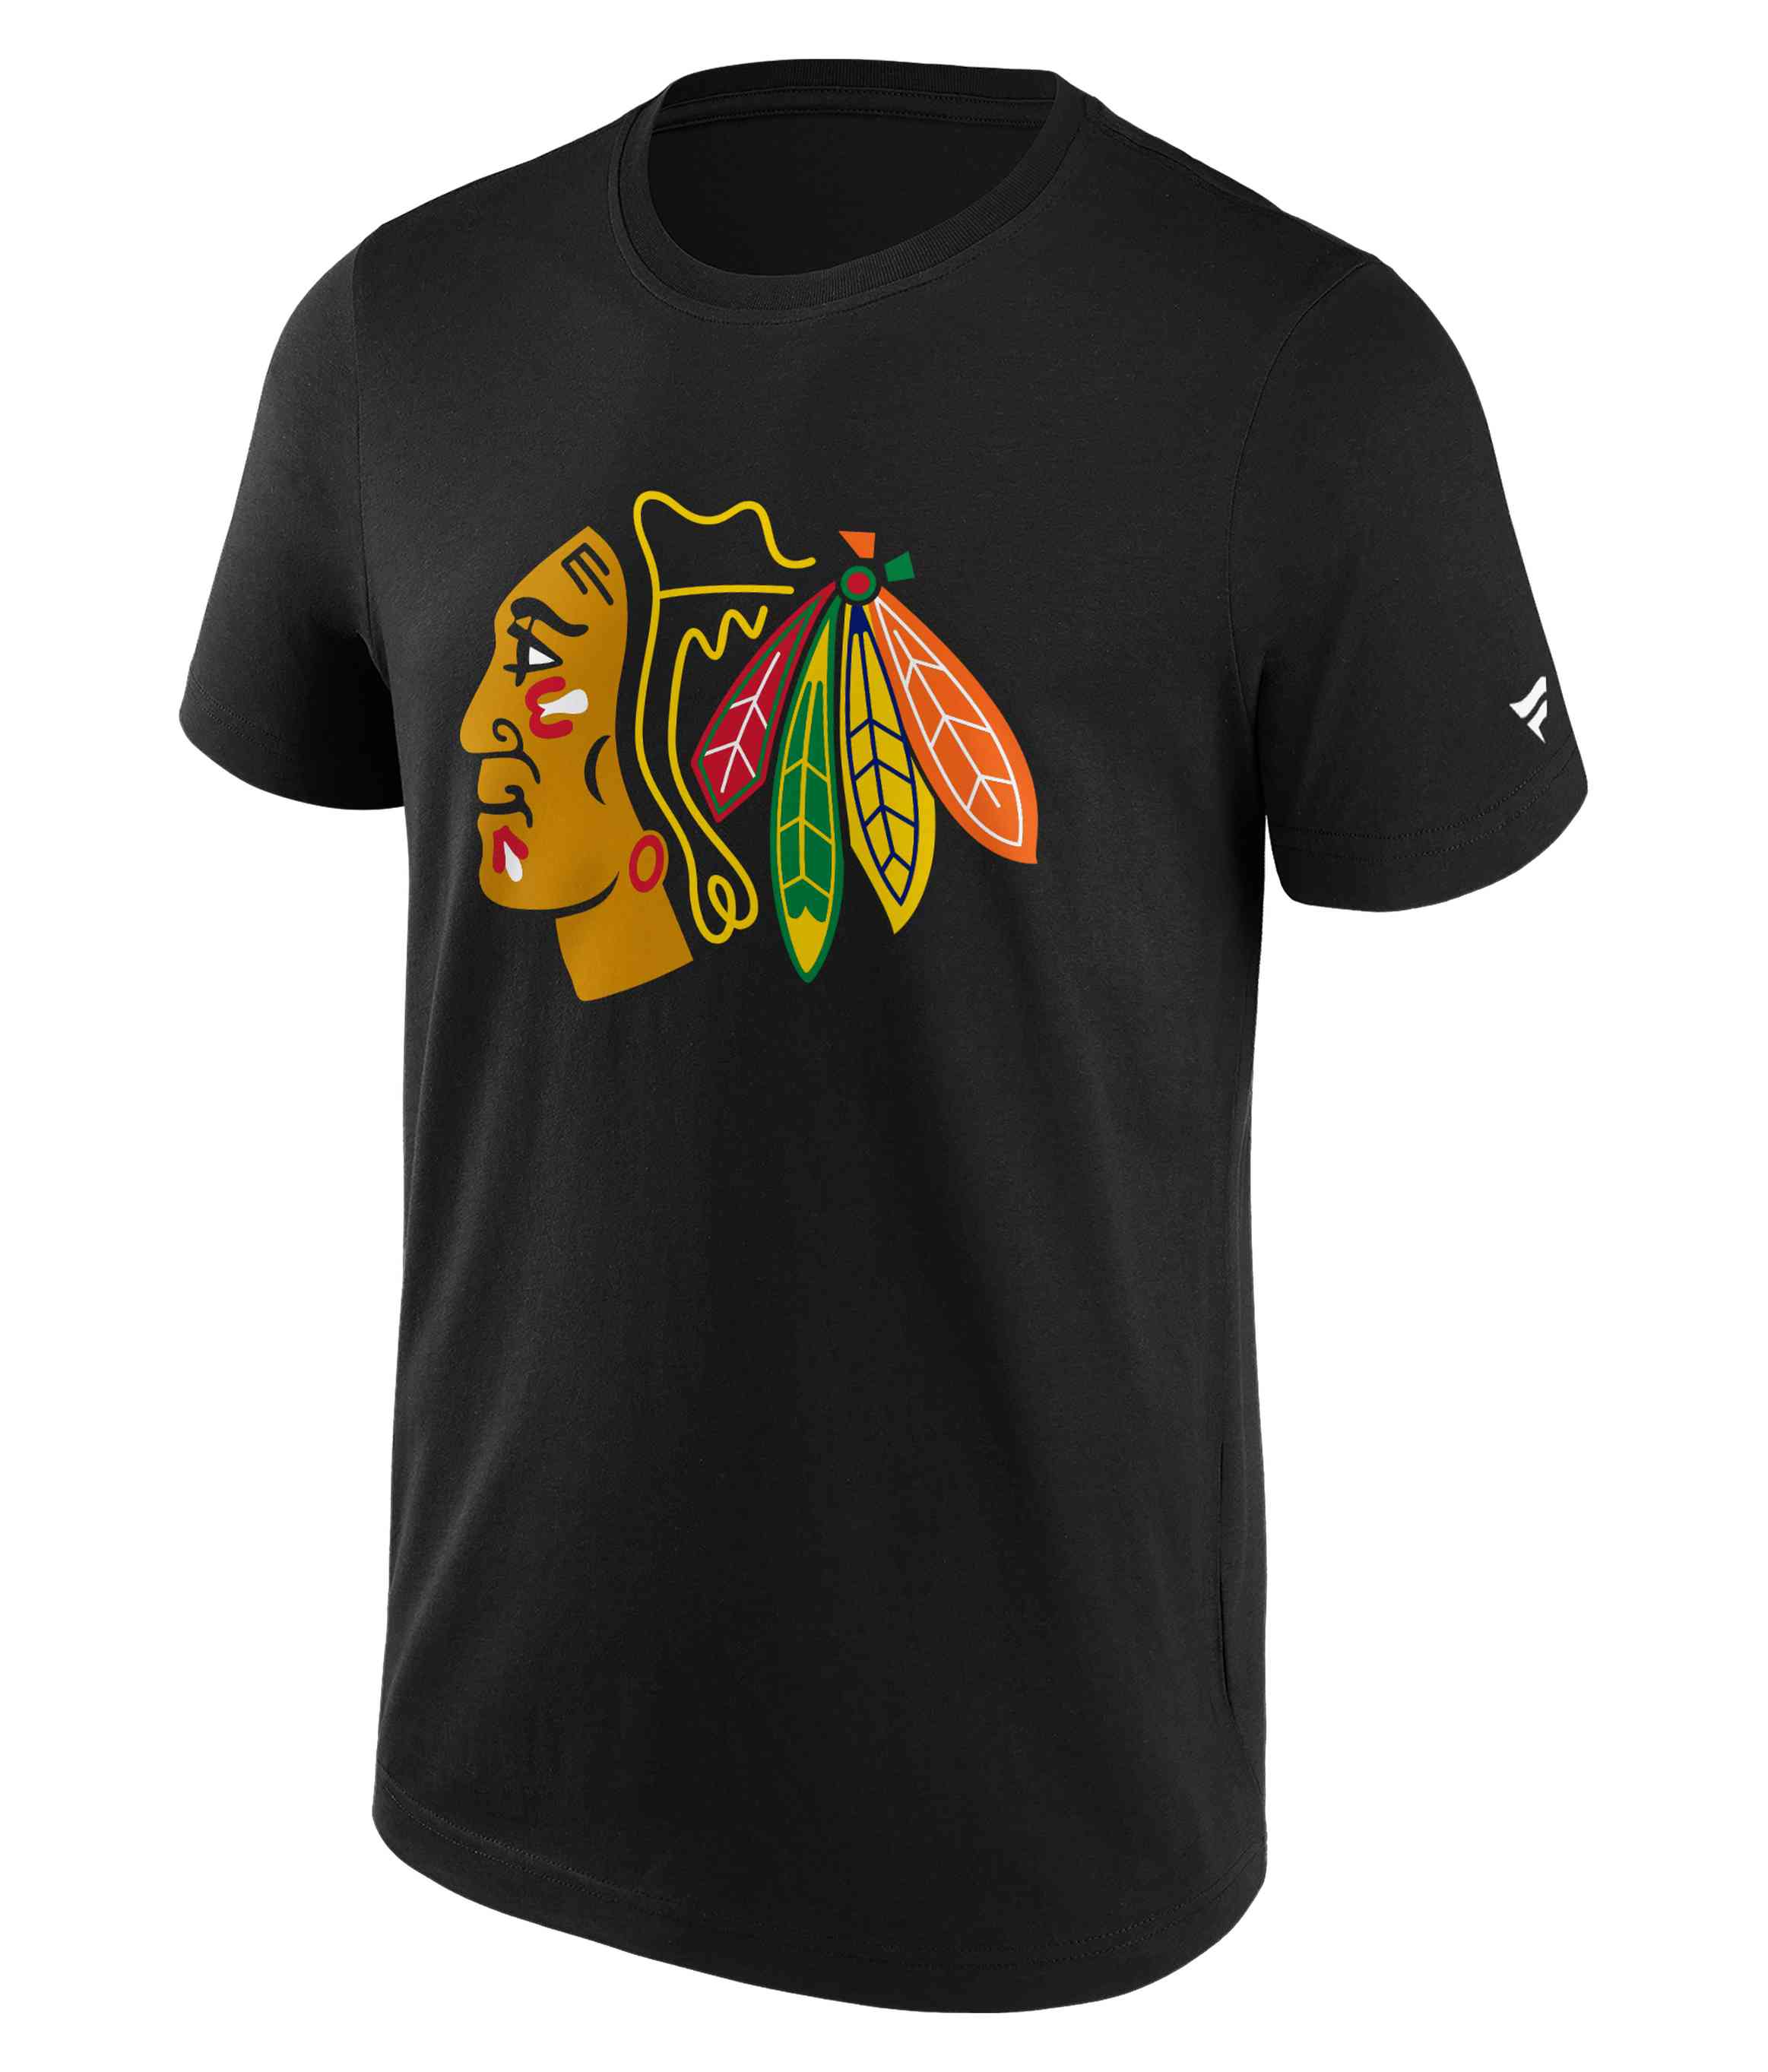 Fanatics - NHL Chicago Blackhawks Primary Logo Graphic T-Shirt